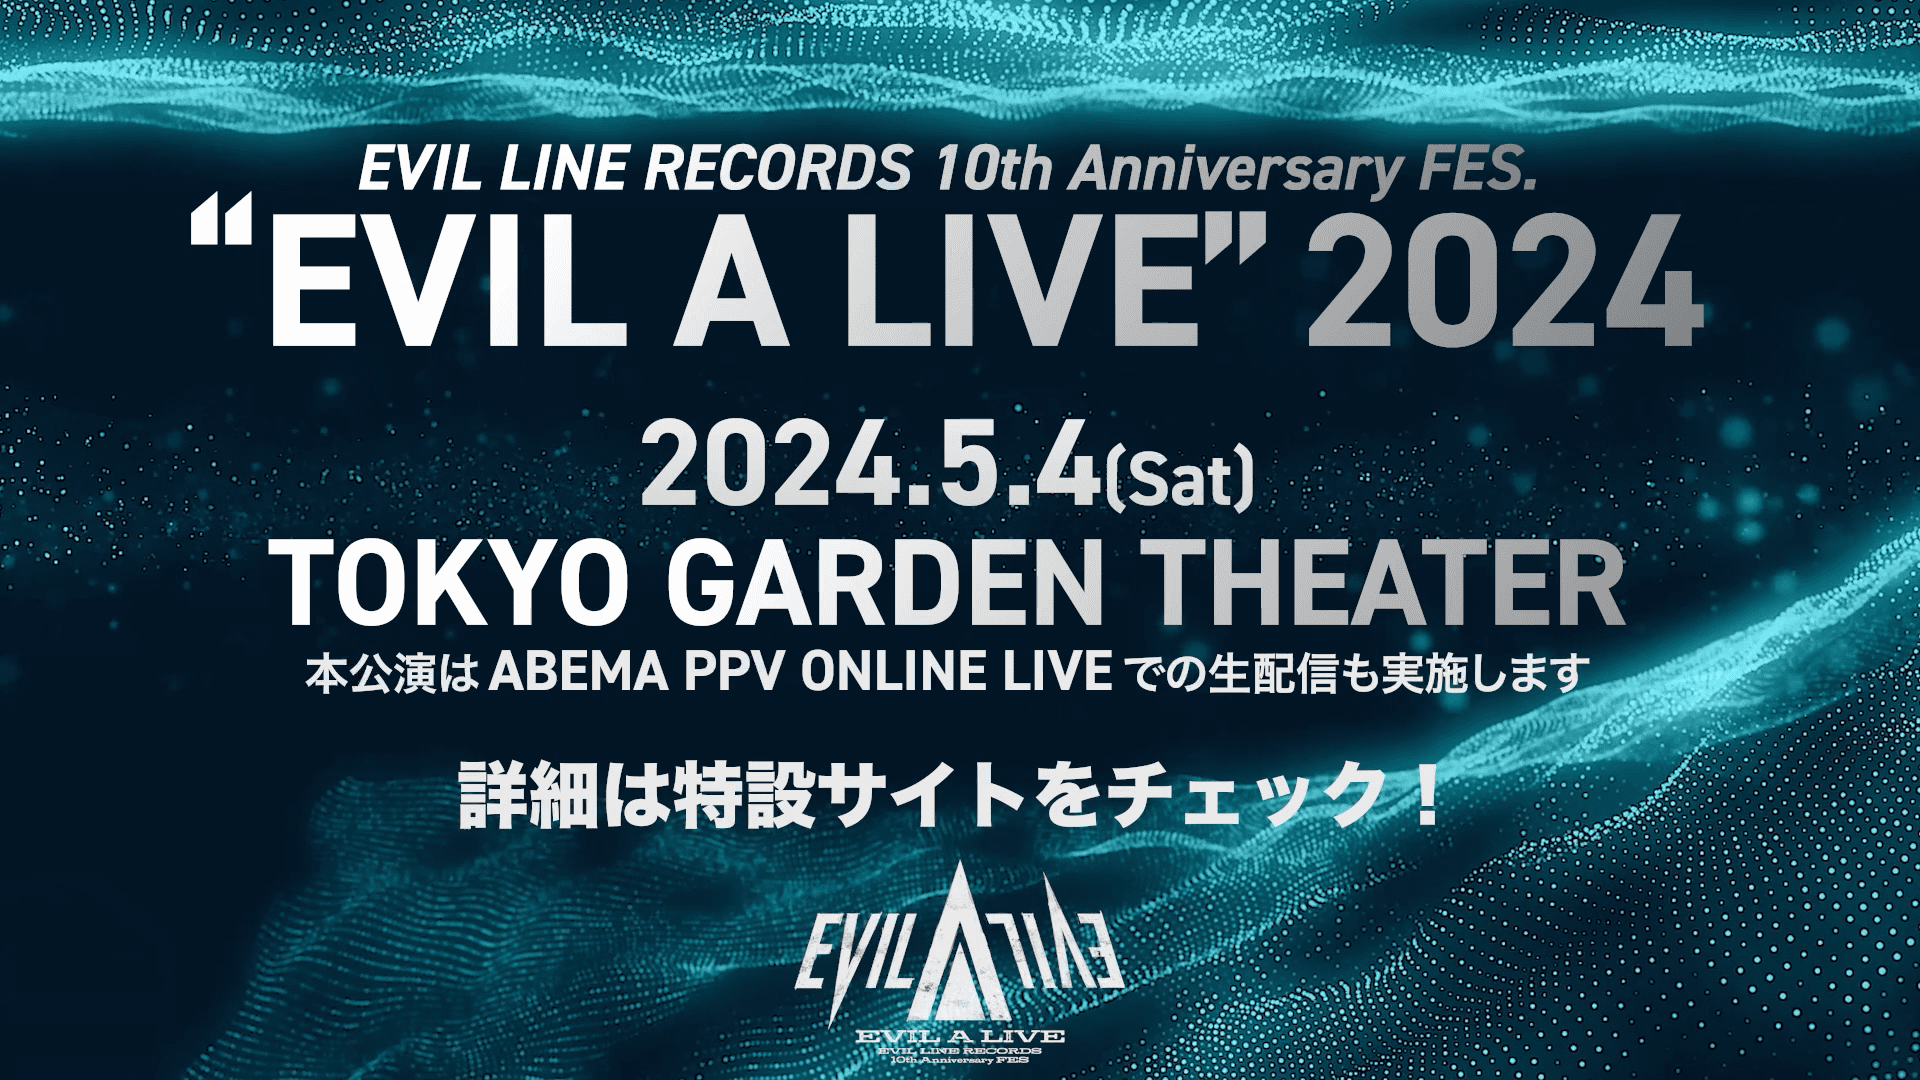 EVIL LINE RECORDS 10th Anniversary FES.
“EVIL A LIVE” 2024